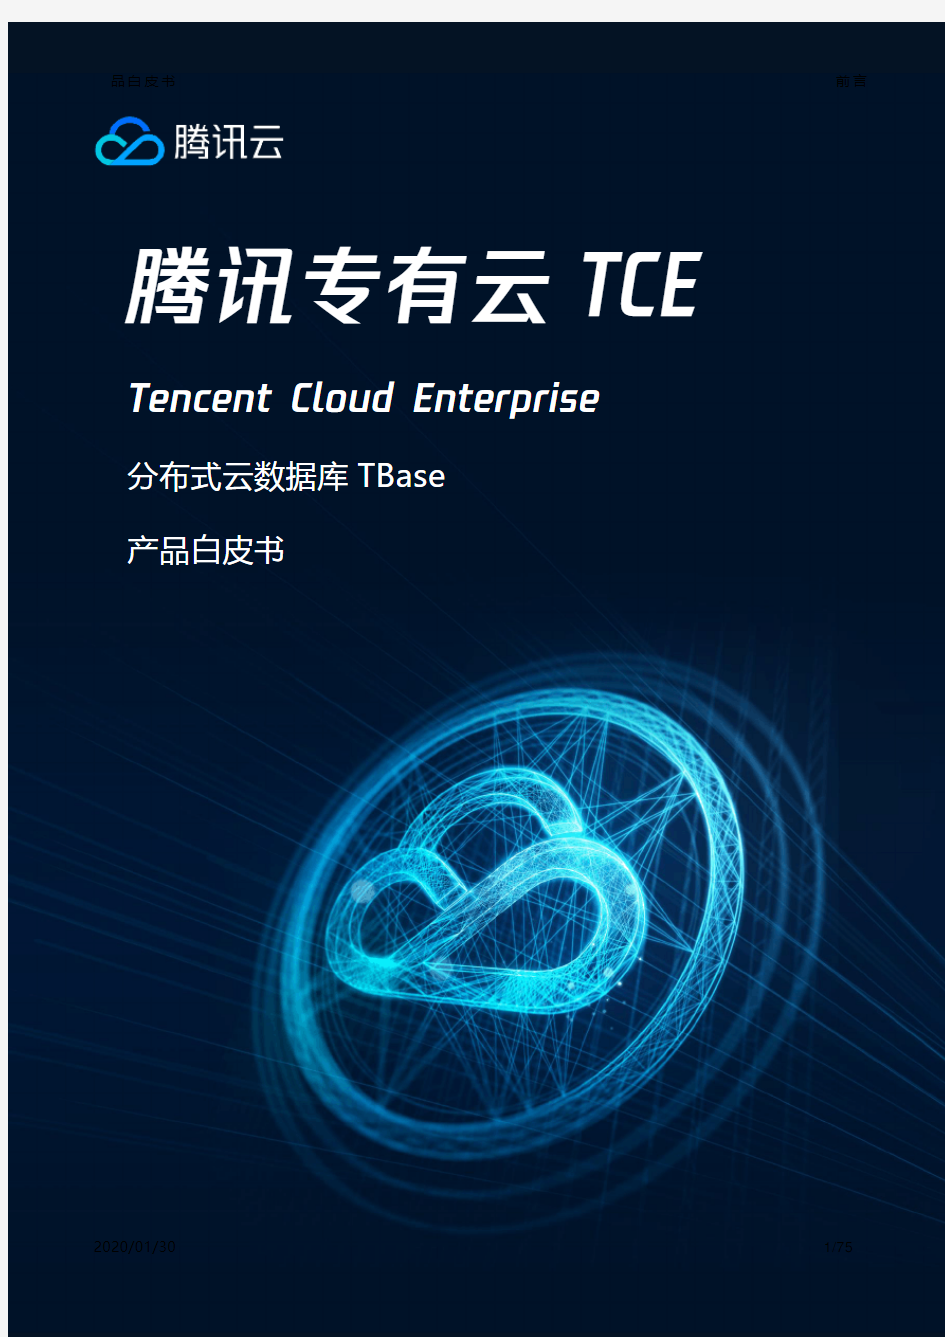 TCE-OS-007-054 腾讯专有云 产品白皮书 分布式云数据库(Tbase)V3.4.2